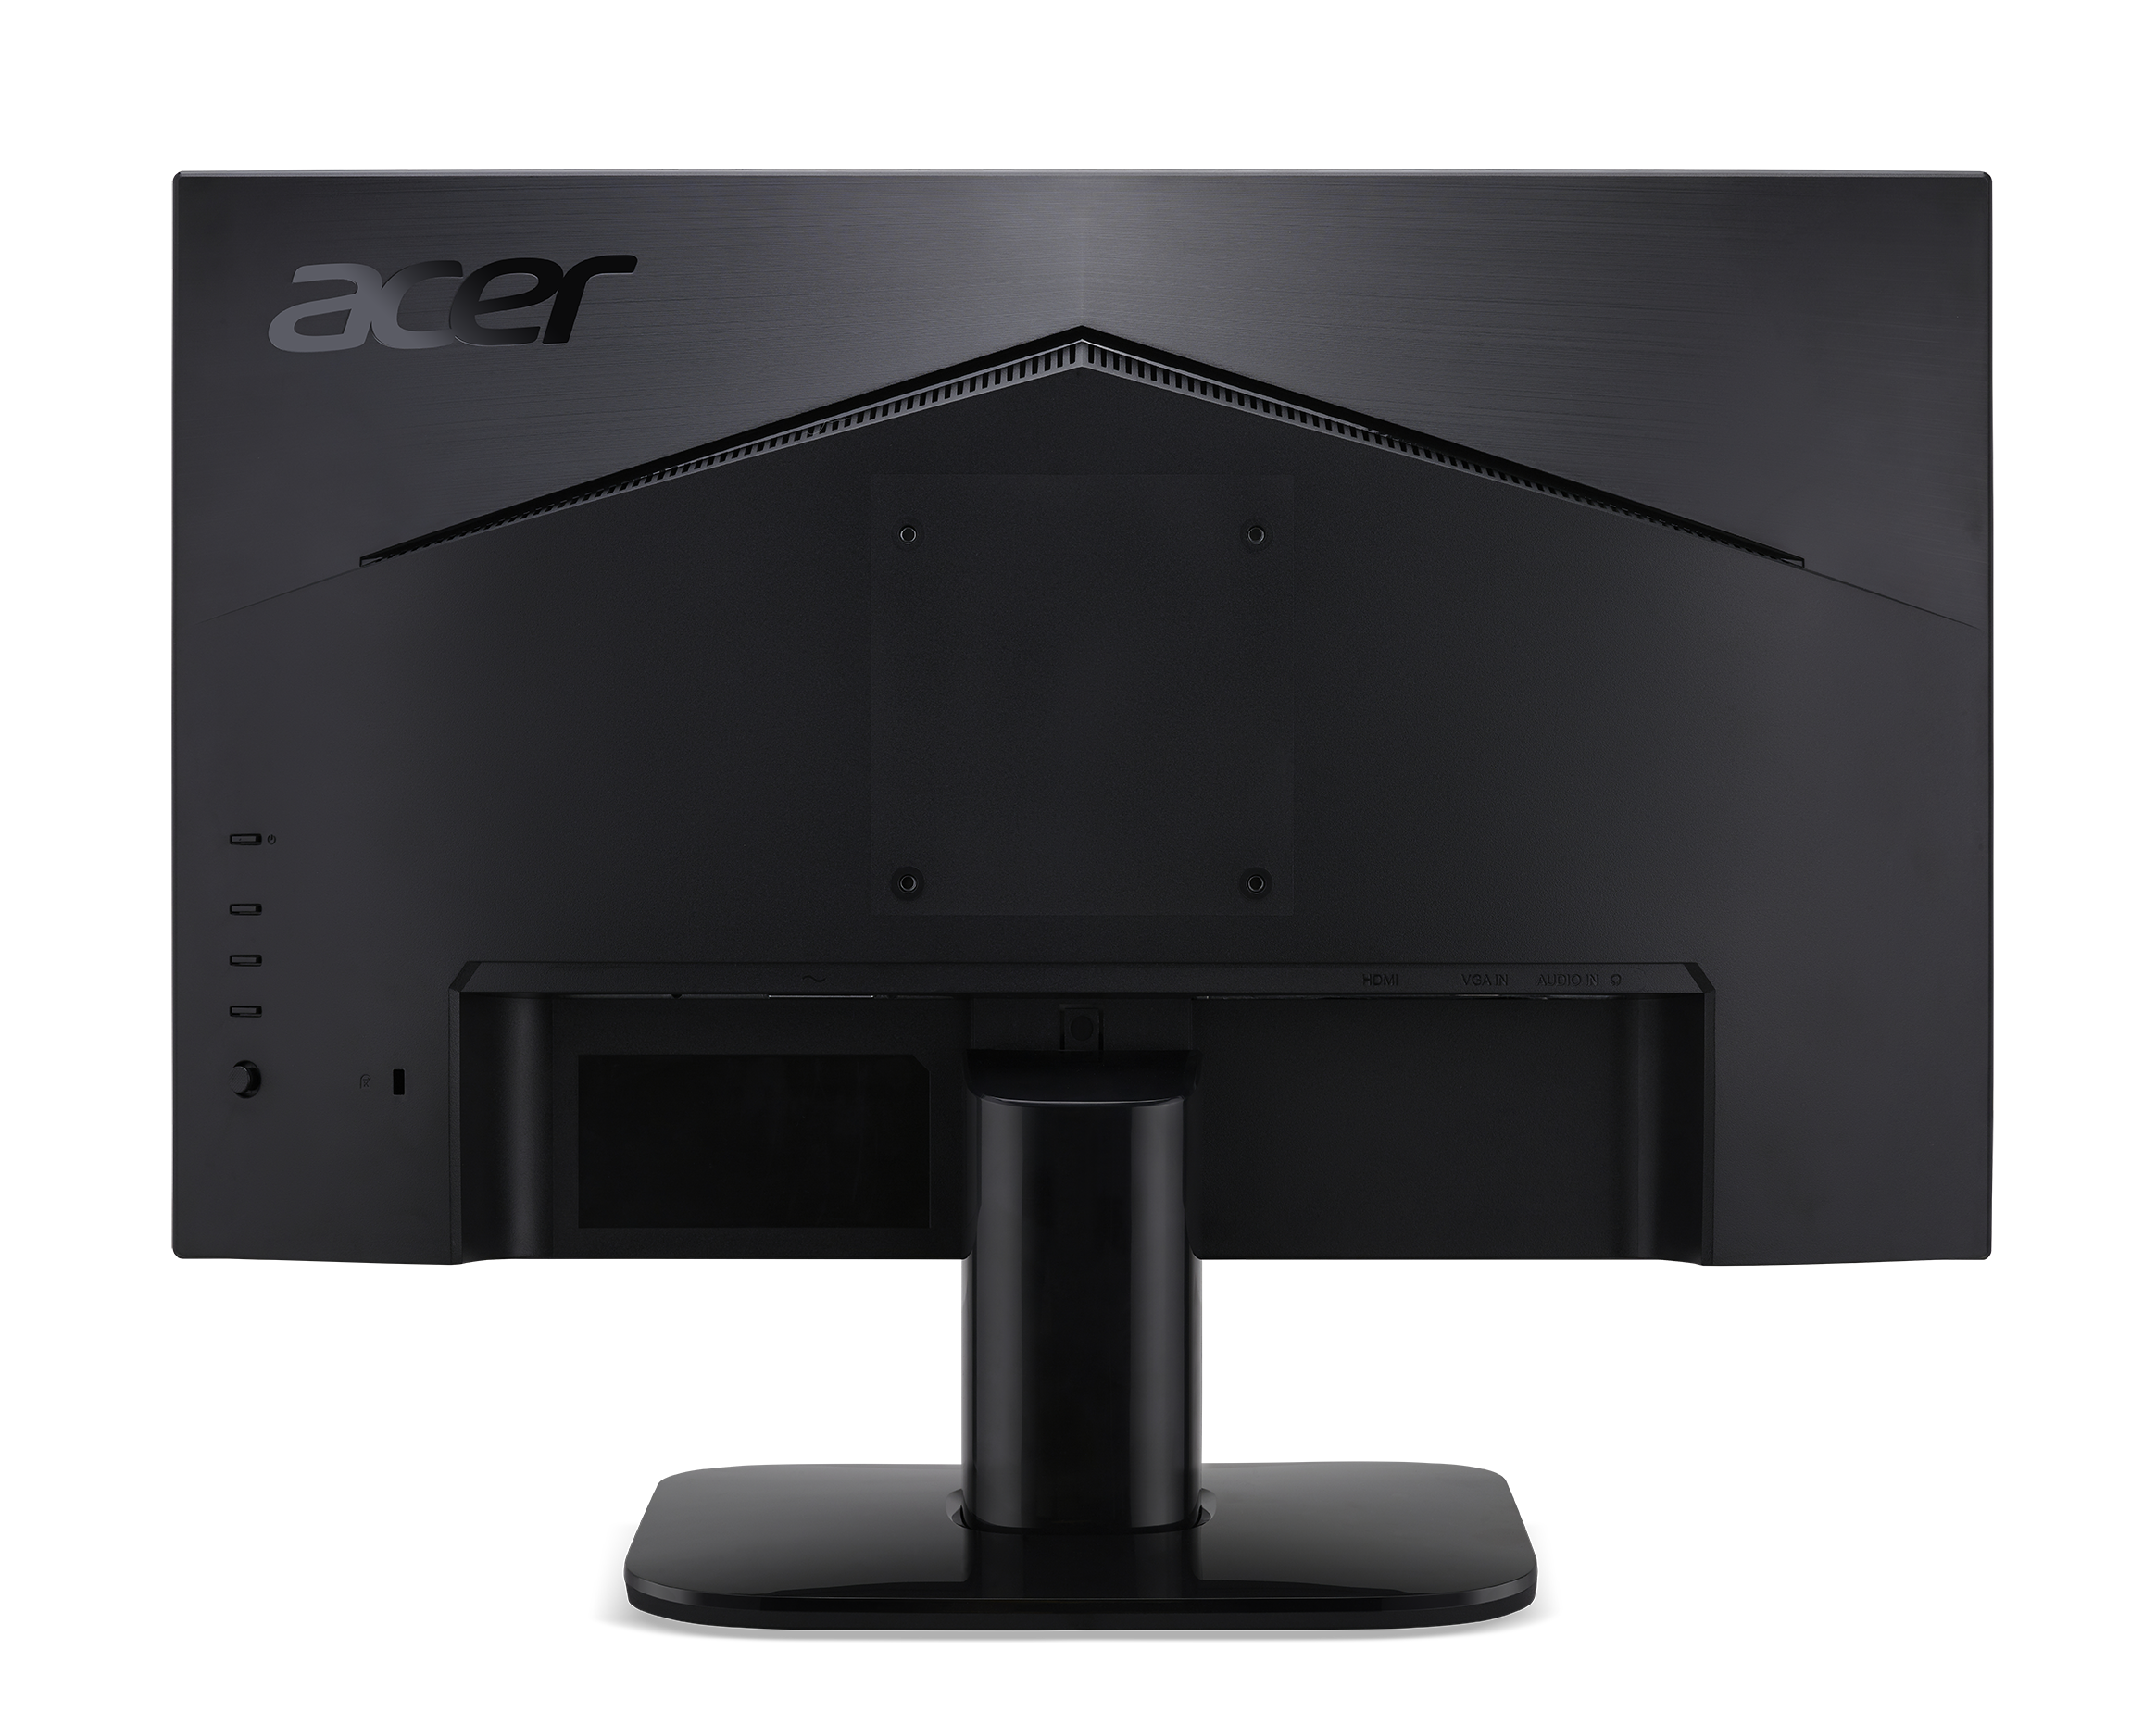 Acer 27” Full HD Monitor, 1920 x 1080, 75Hz Refresh Rate with AMD Radeon FreeSync, KA272 Bi - image 5 of 5